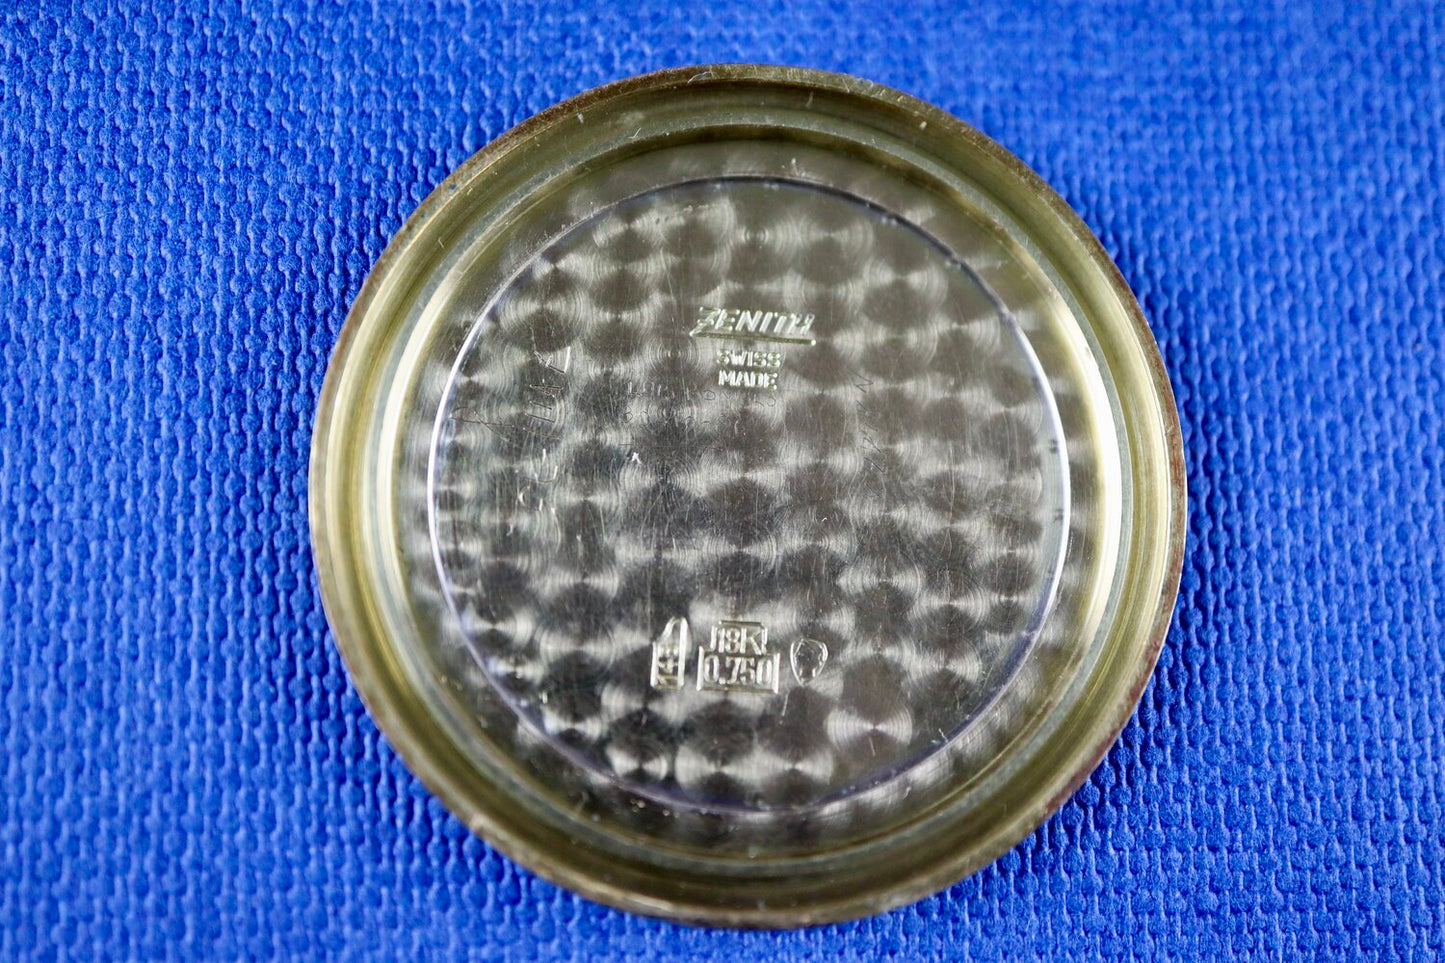 Zenith Caliber 135 Chronometer 1950s RARE